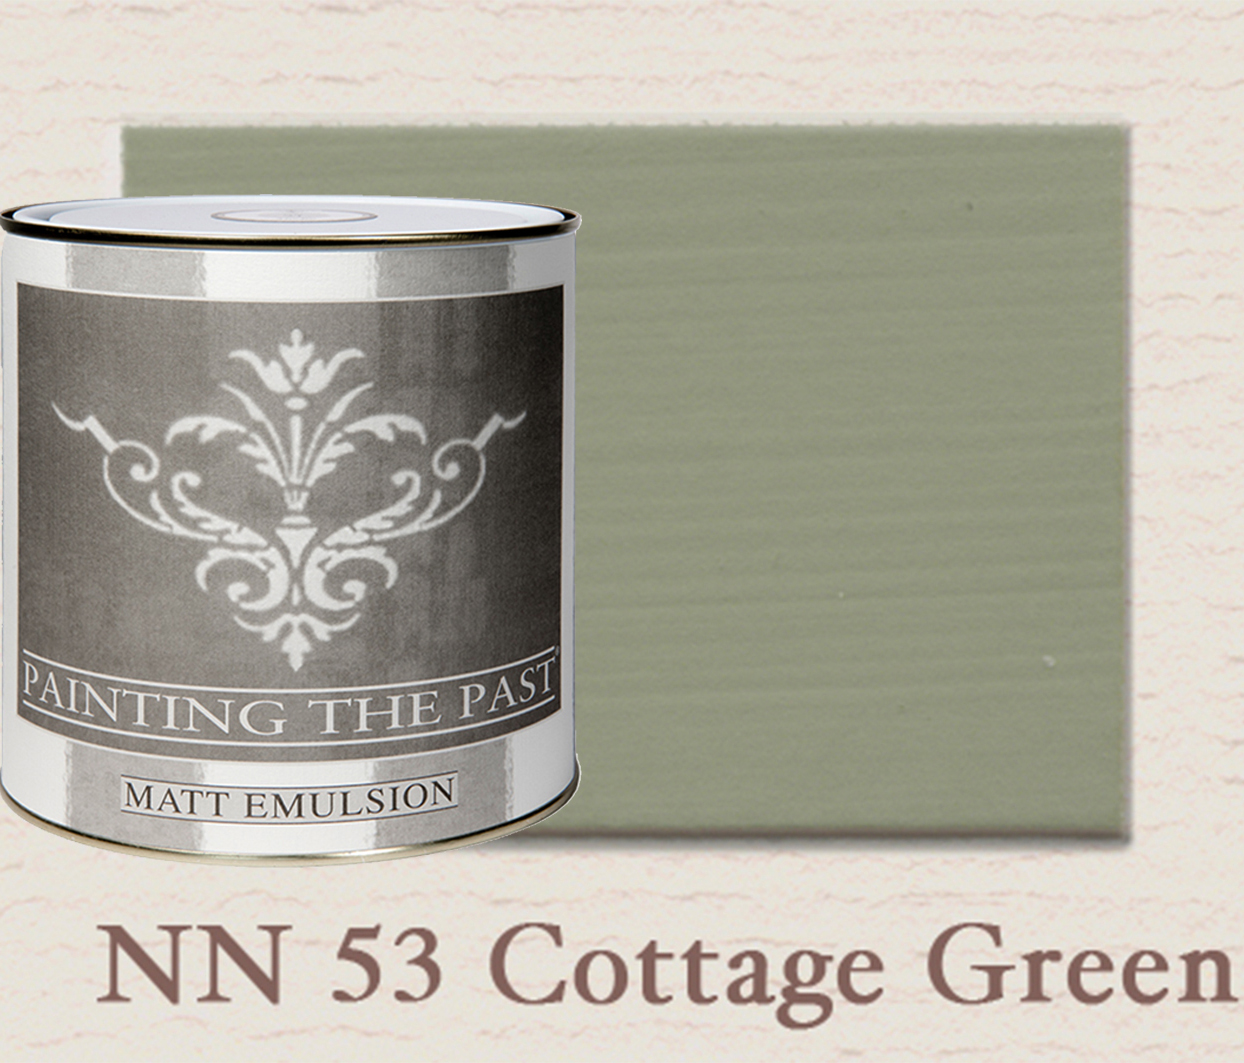 Painting The Past Matt Emulsion Cottage Green